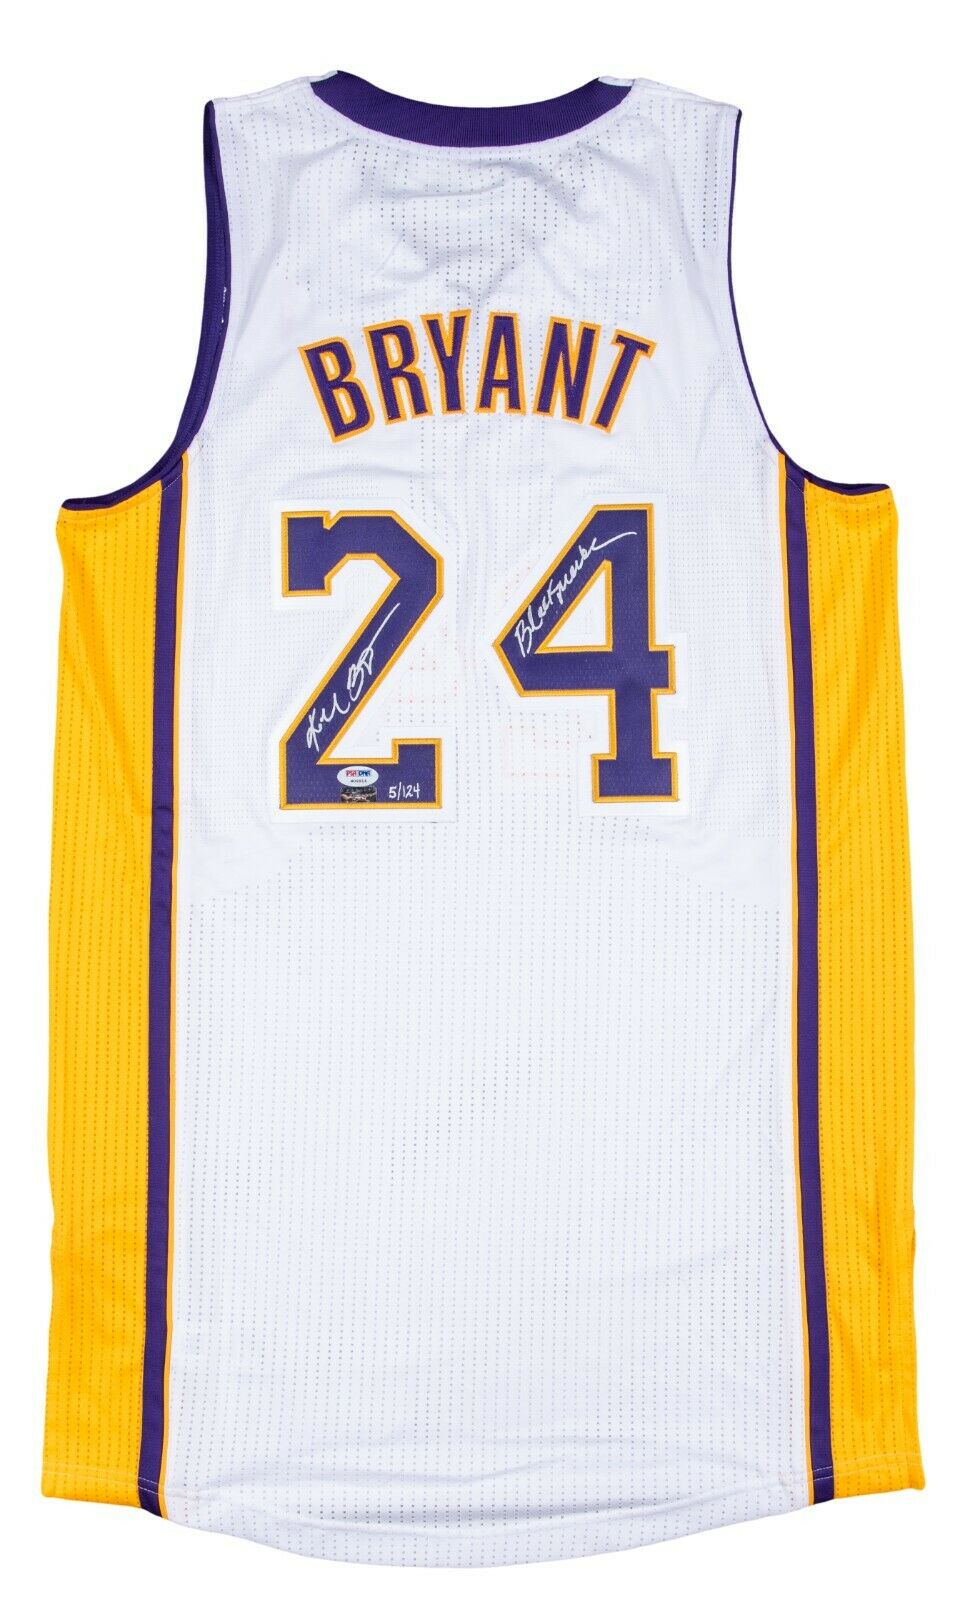 Kobe Bryant Black Mamba #8 #24 Los Angeles Authentic Embroidered